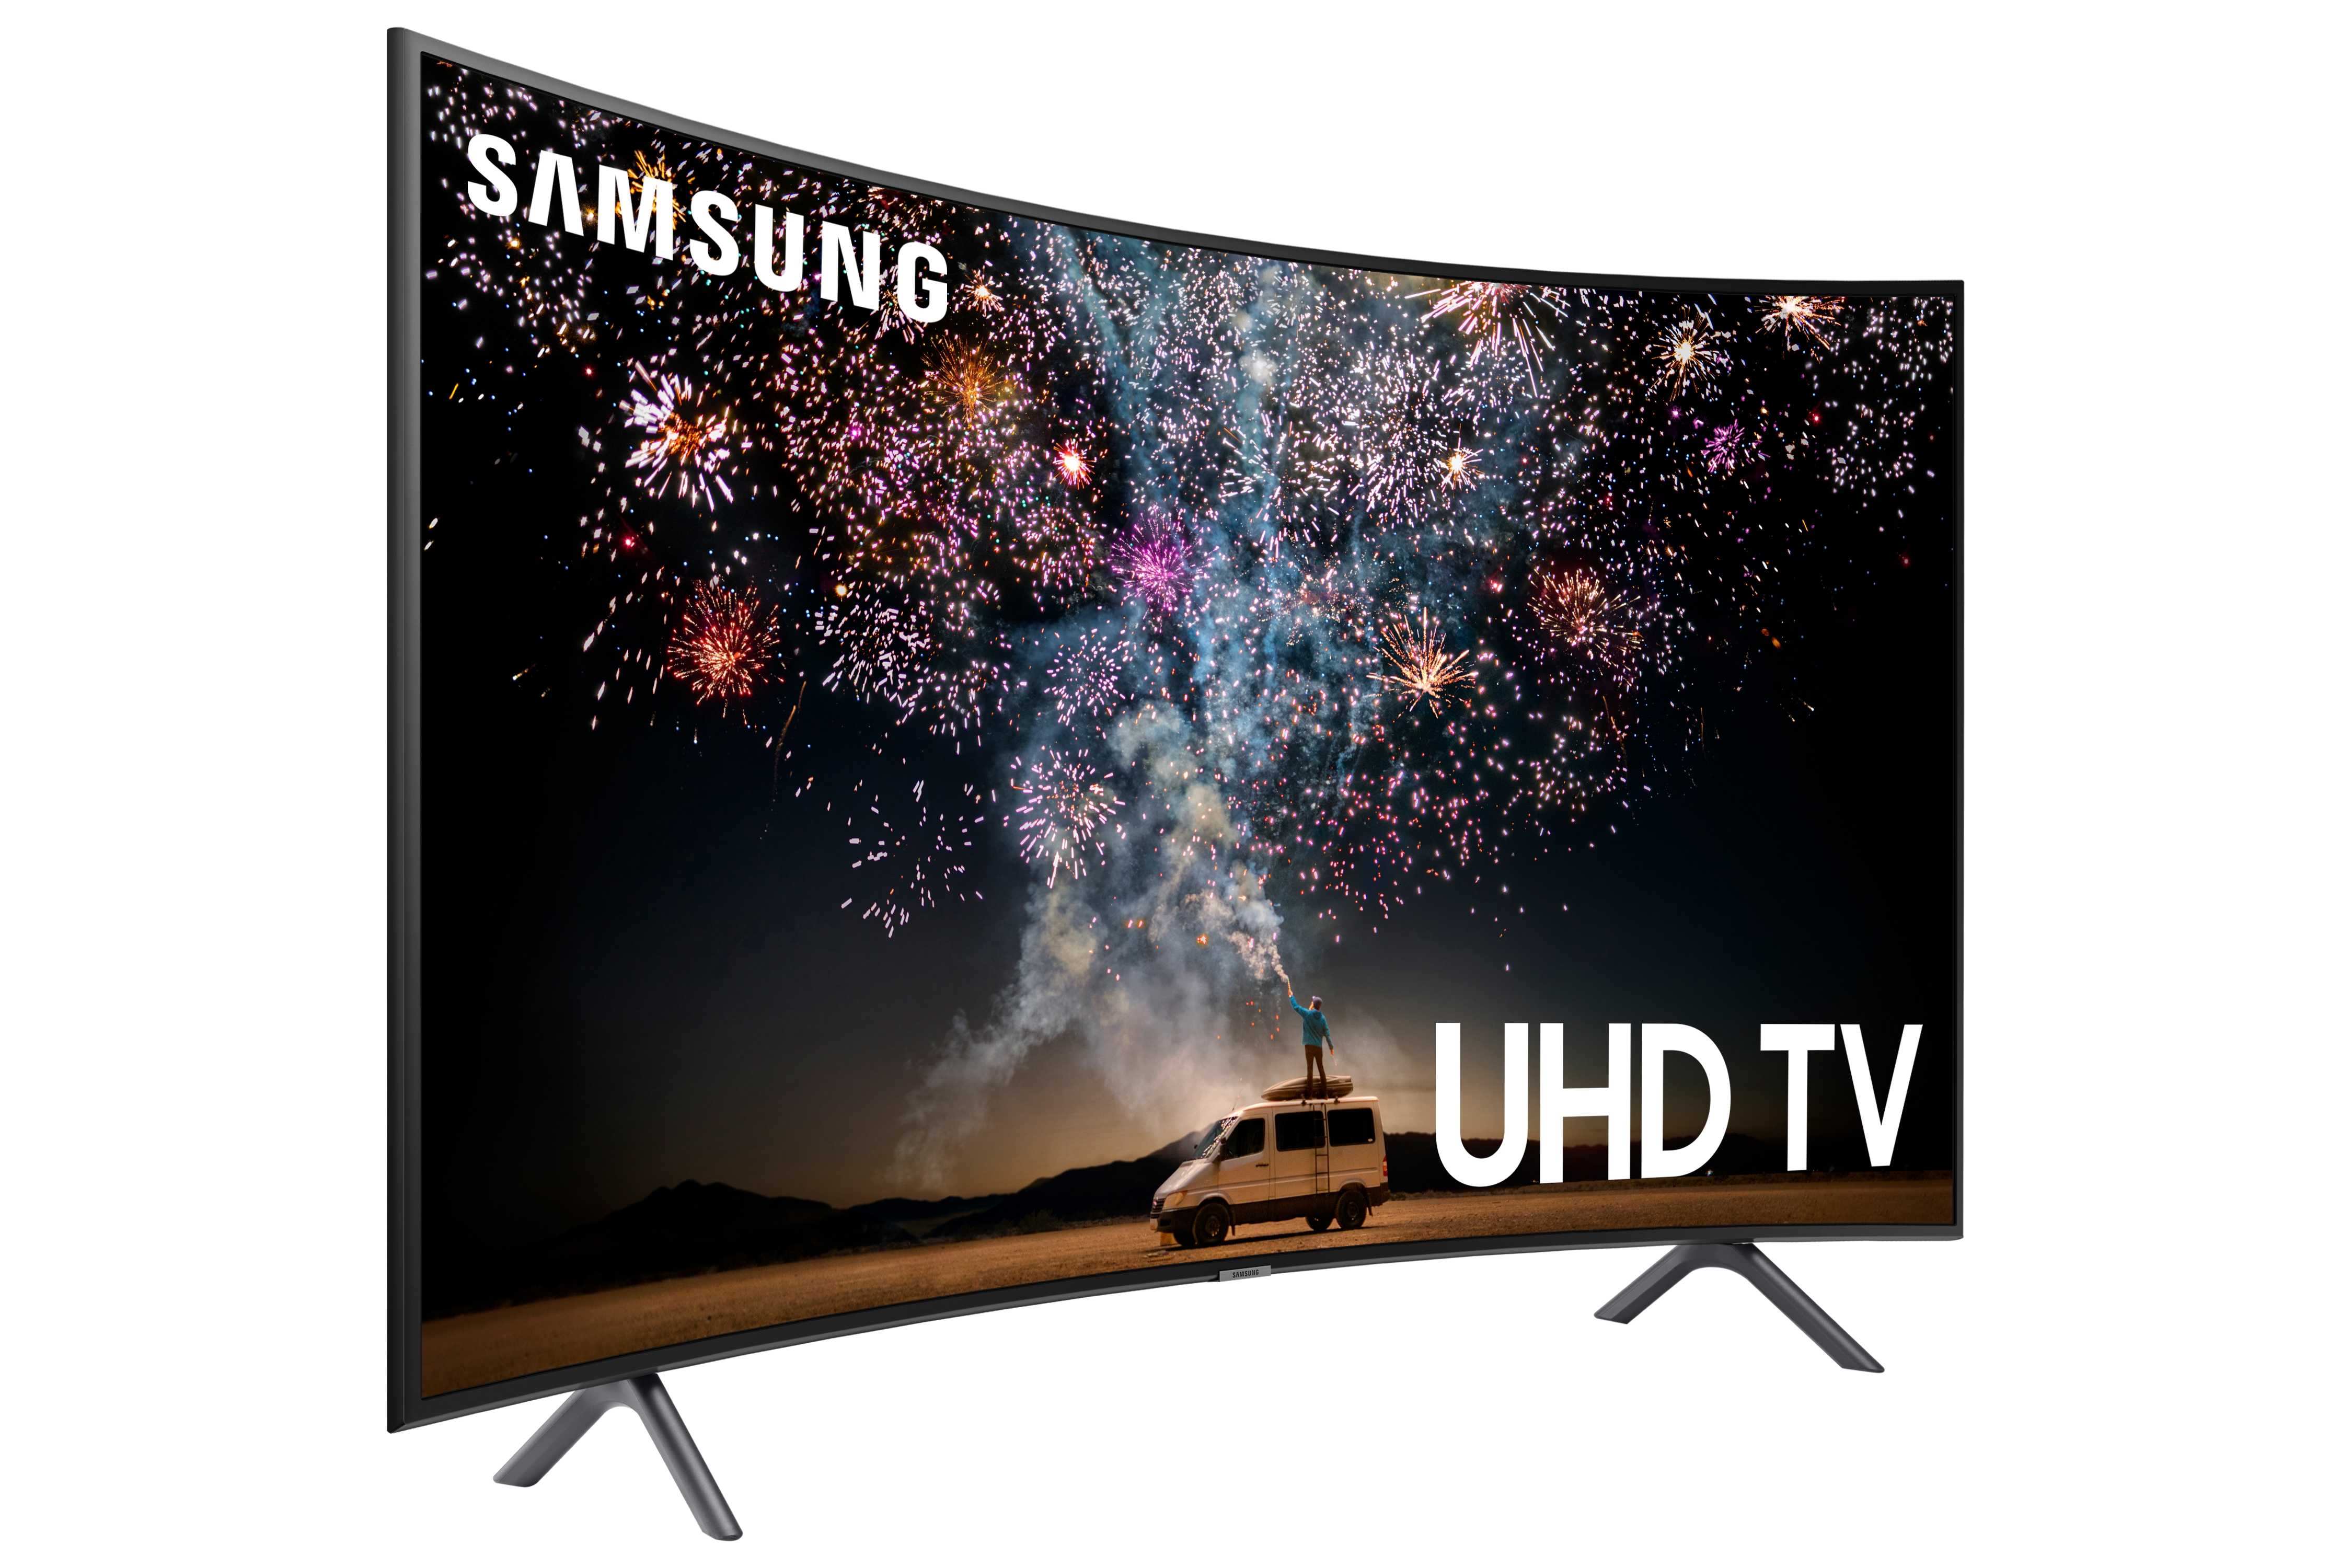 Uhd 4k Curved Smart Tv Ru7300 65 Specs Price Samsung Us